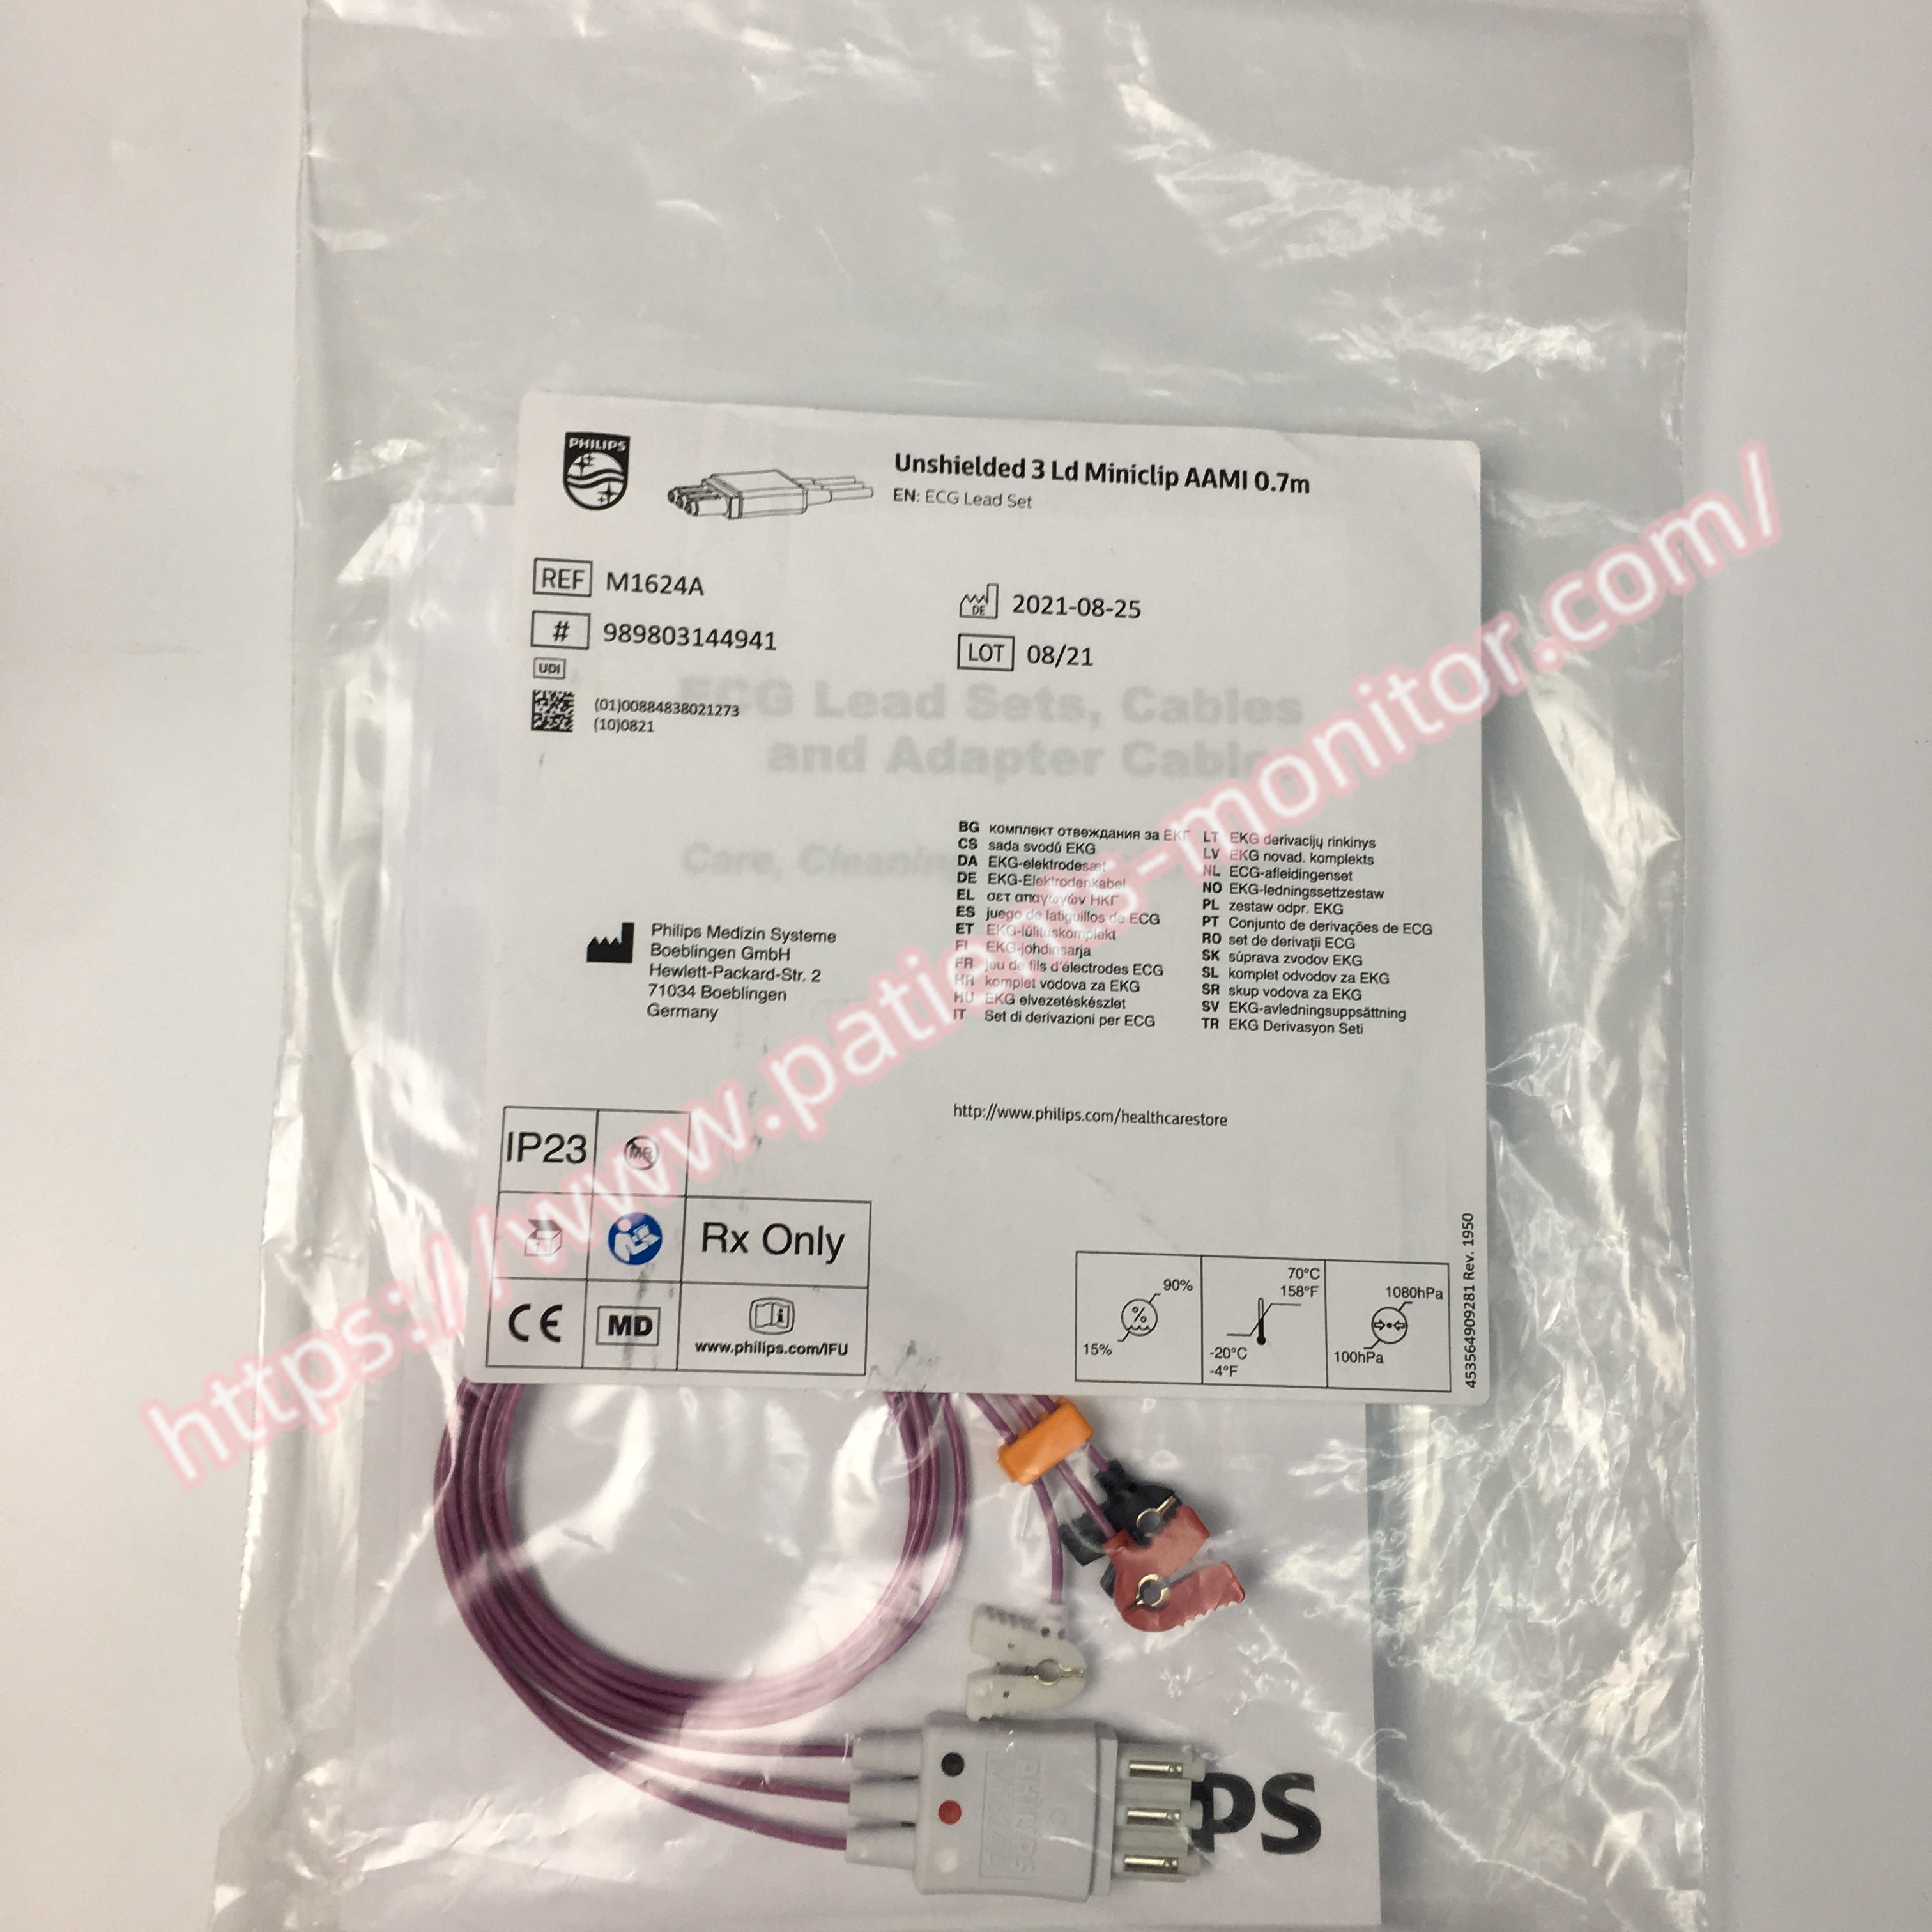  Philips Neonatal ECG Lead Set Unshielded 3 Lead Miniclip AAMI 0.7M M1624A 989803144941 Manufactures